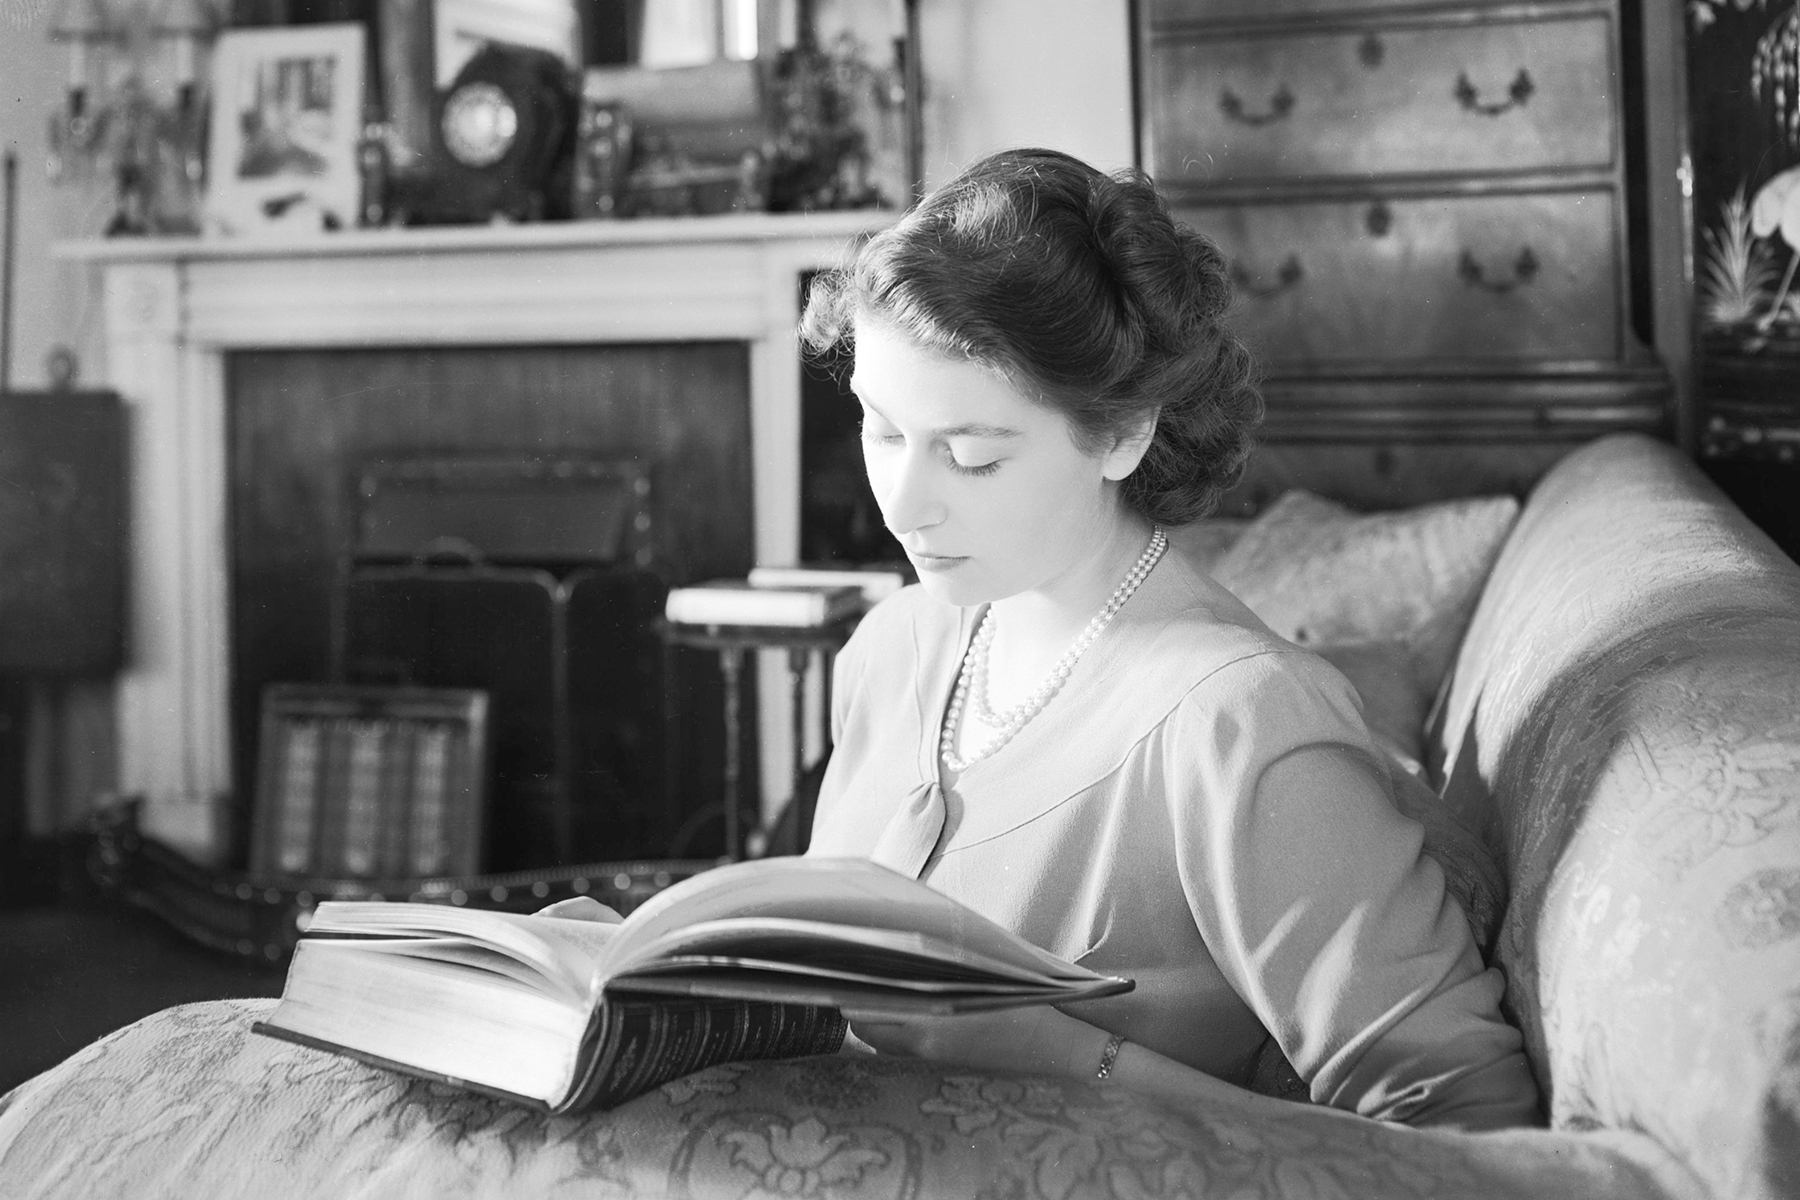 Image of Queen Elizabeth II reading a book